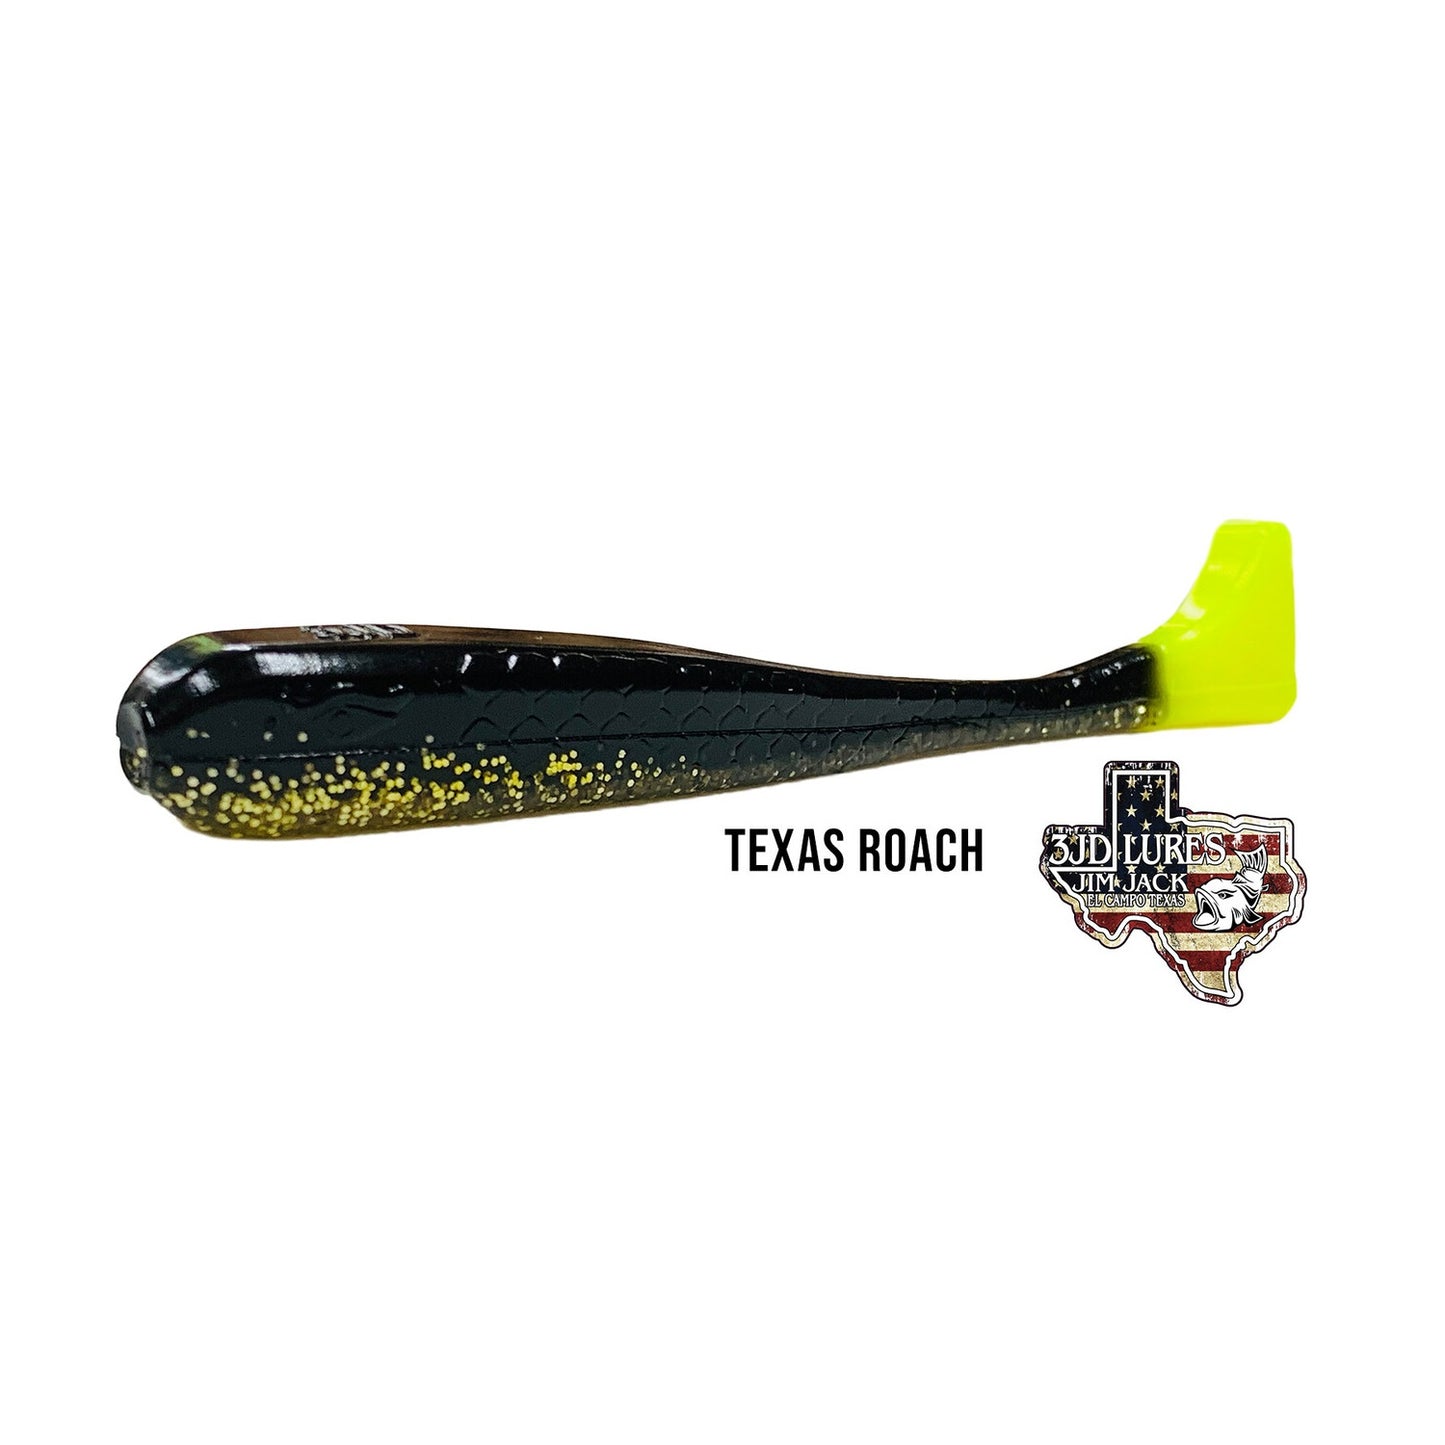 3JD Lures - Texas Roach